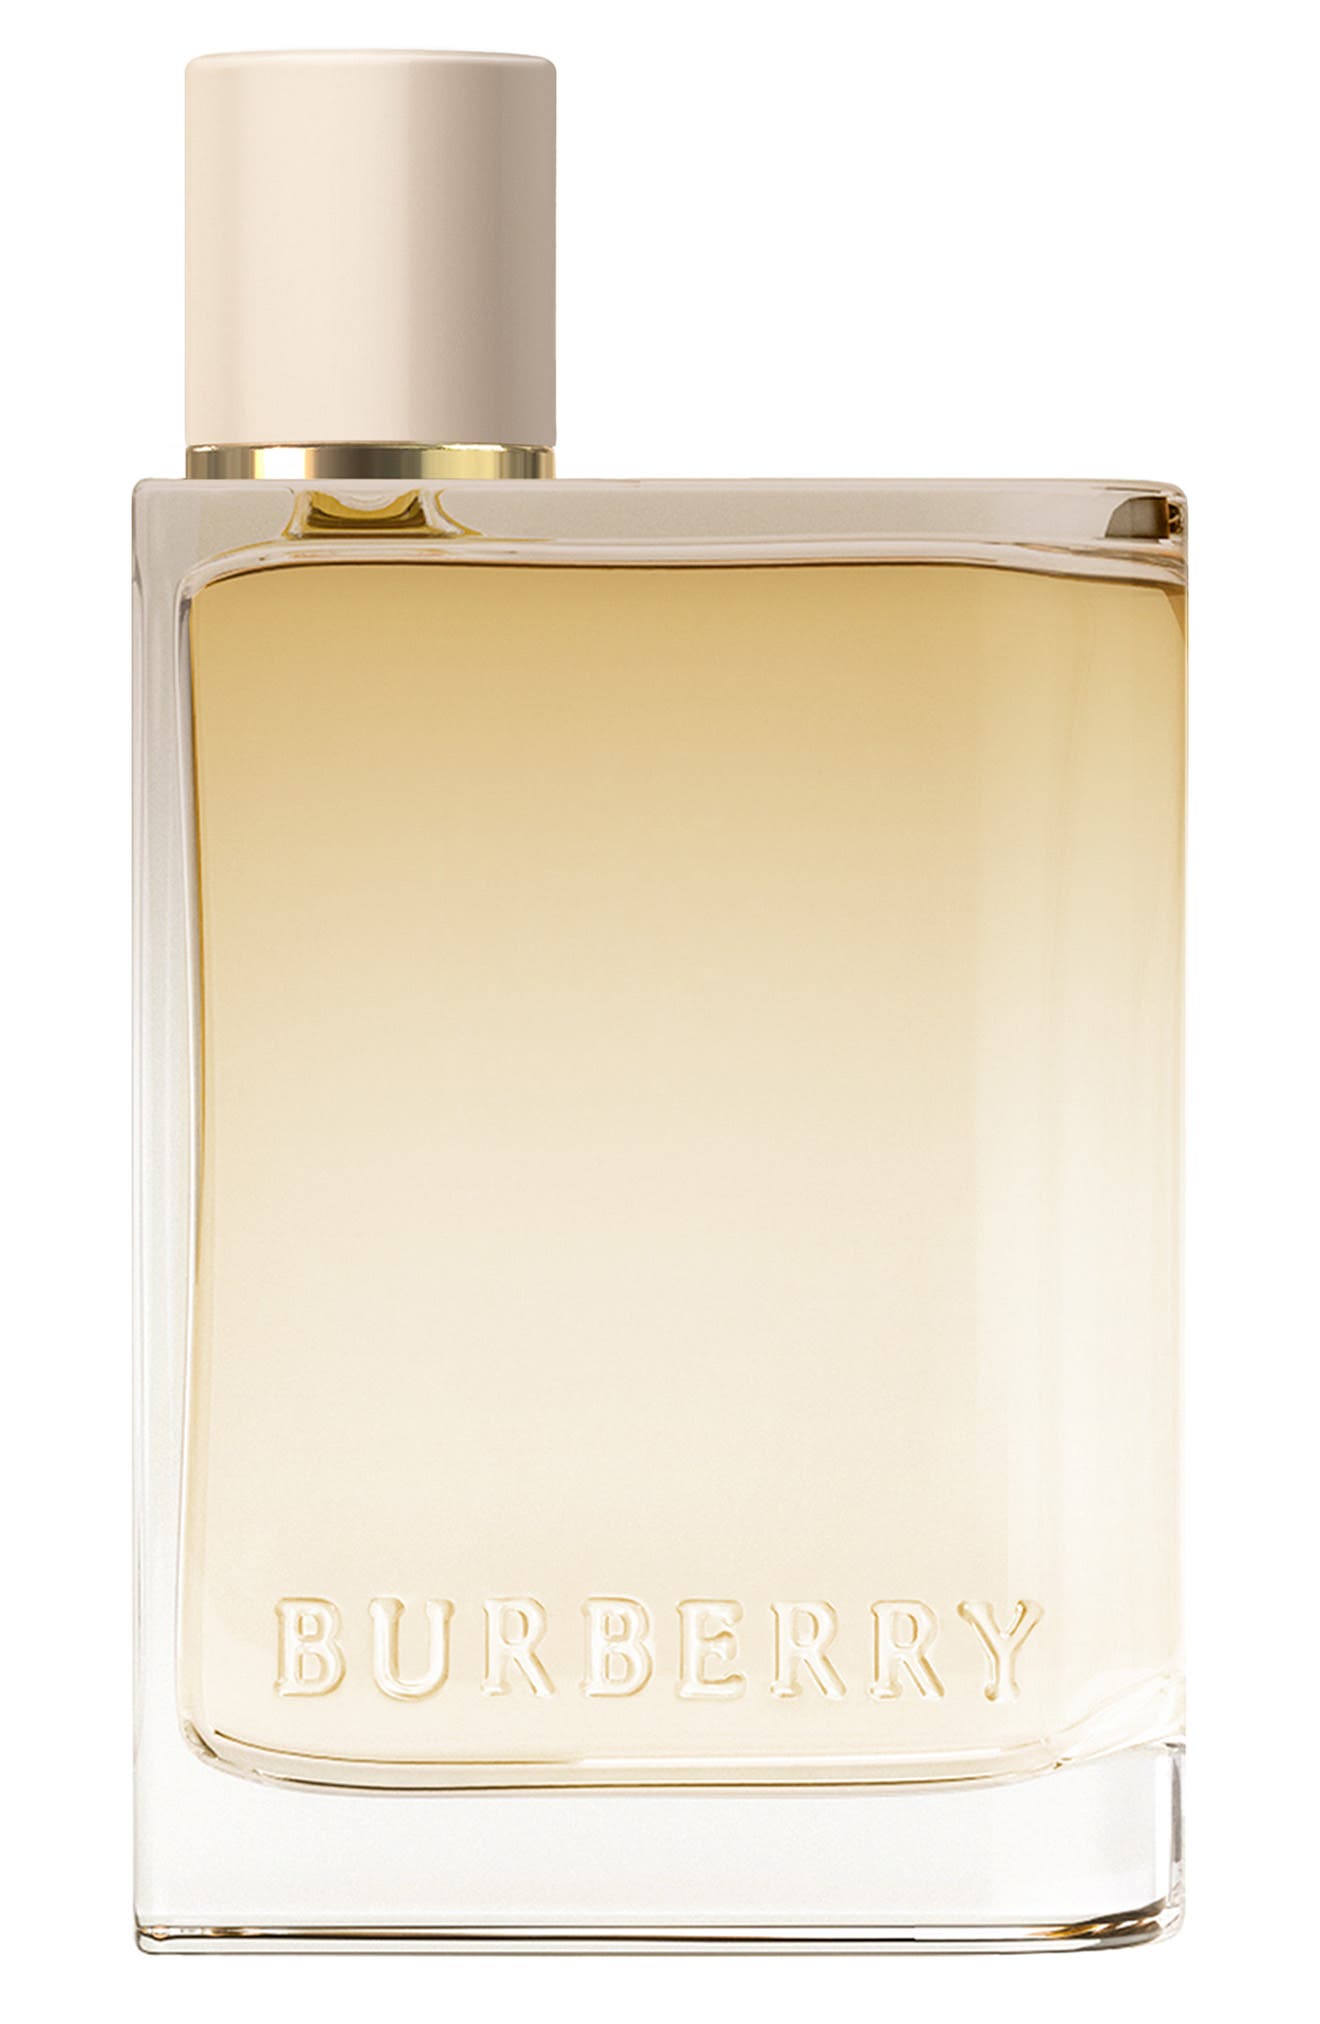 nordstrom burberry perfume